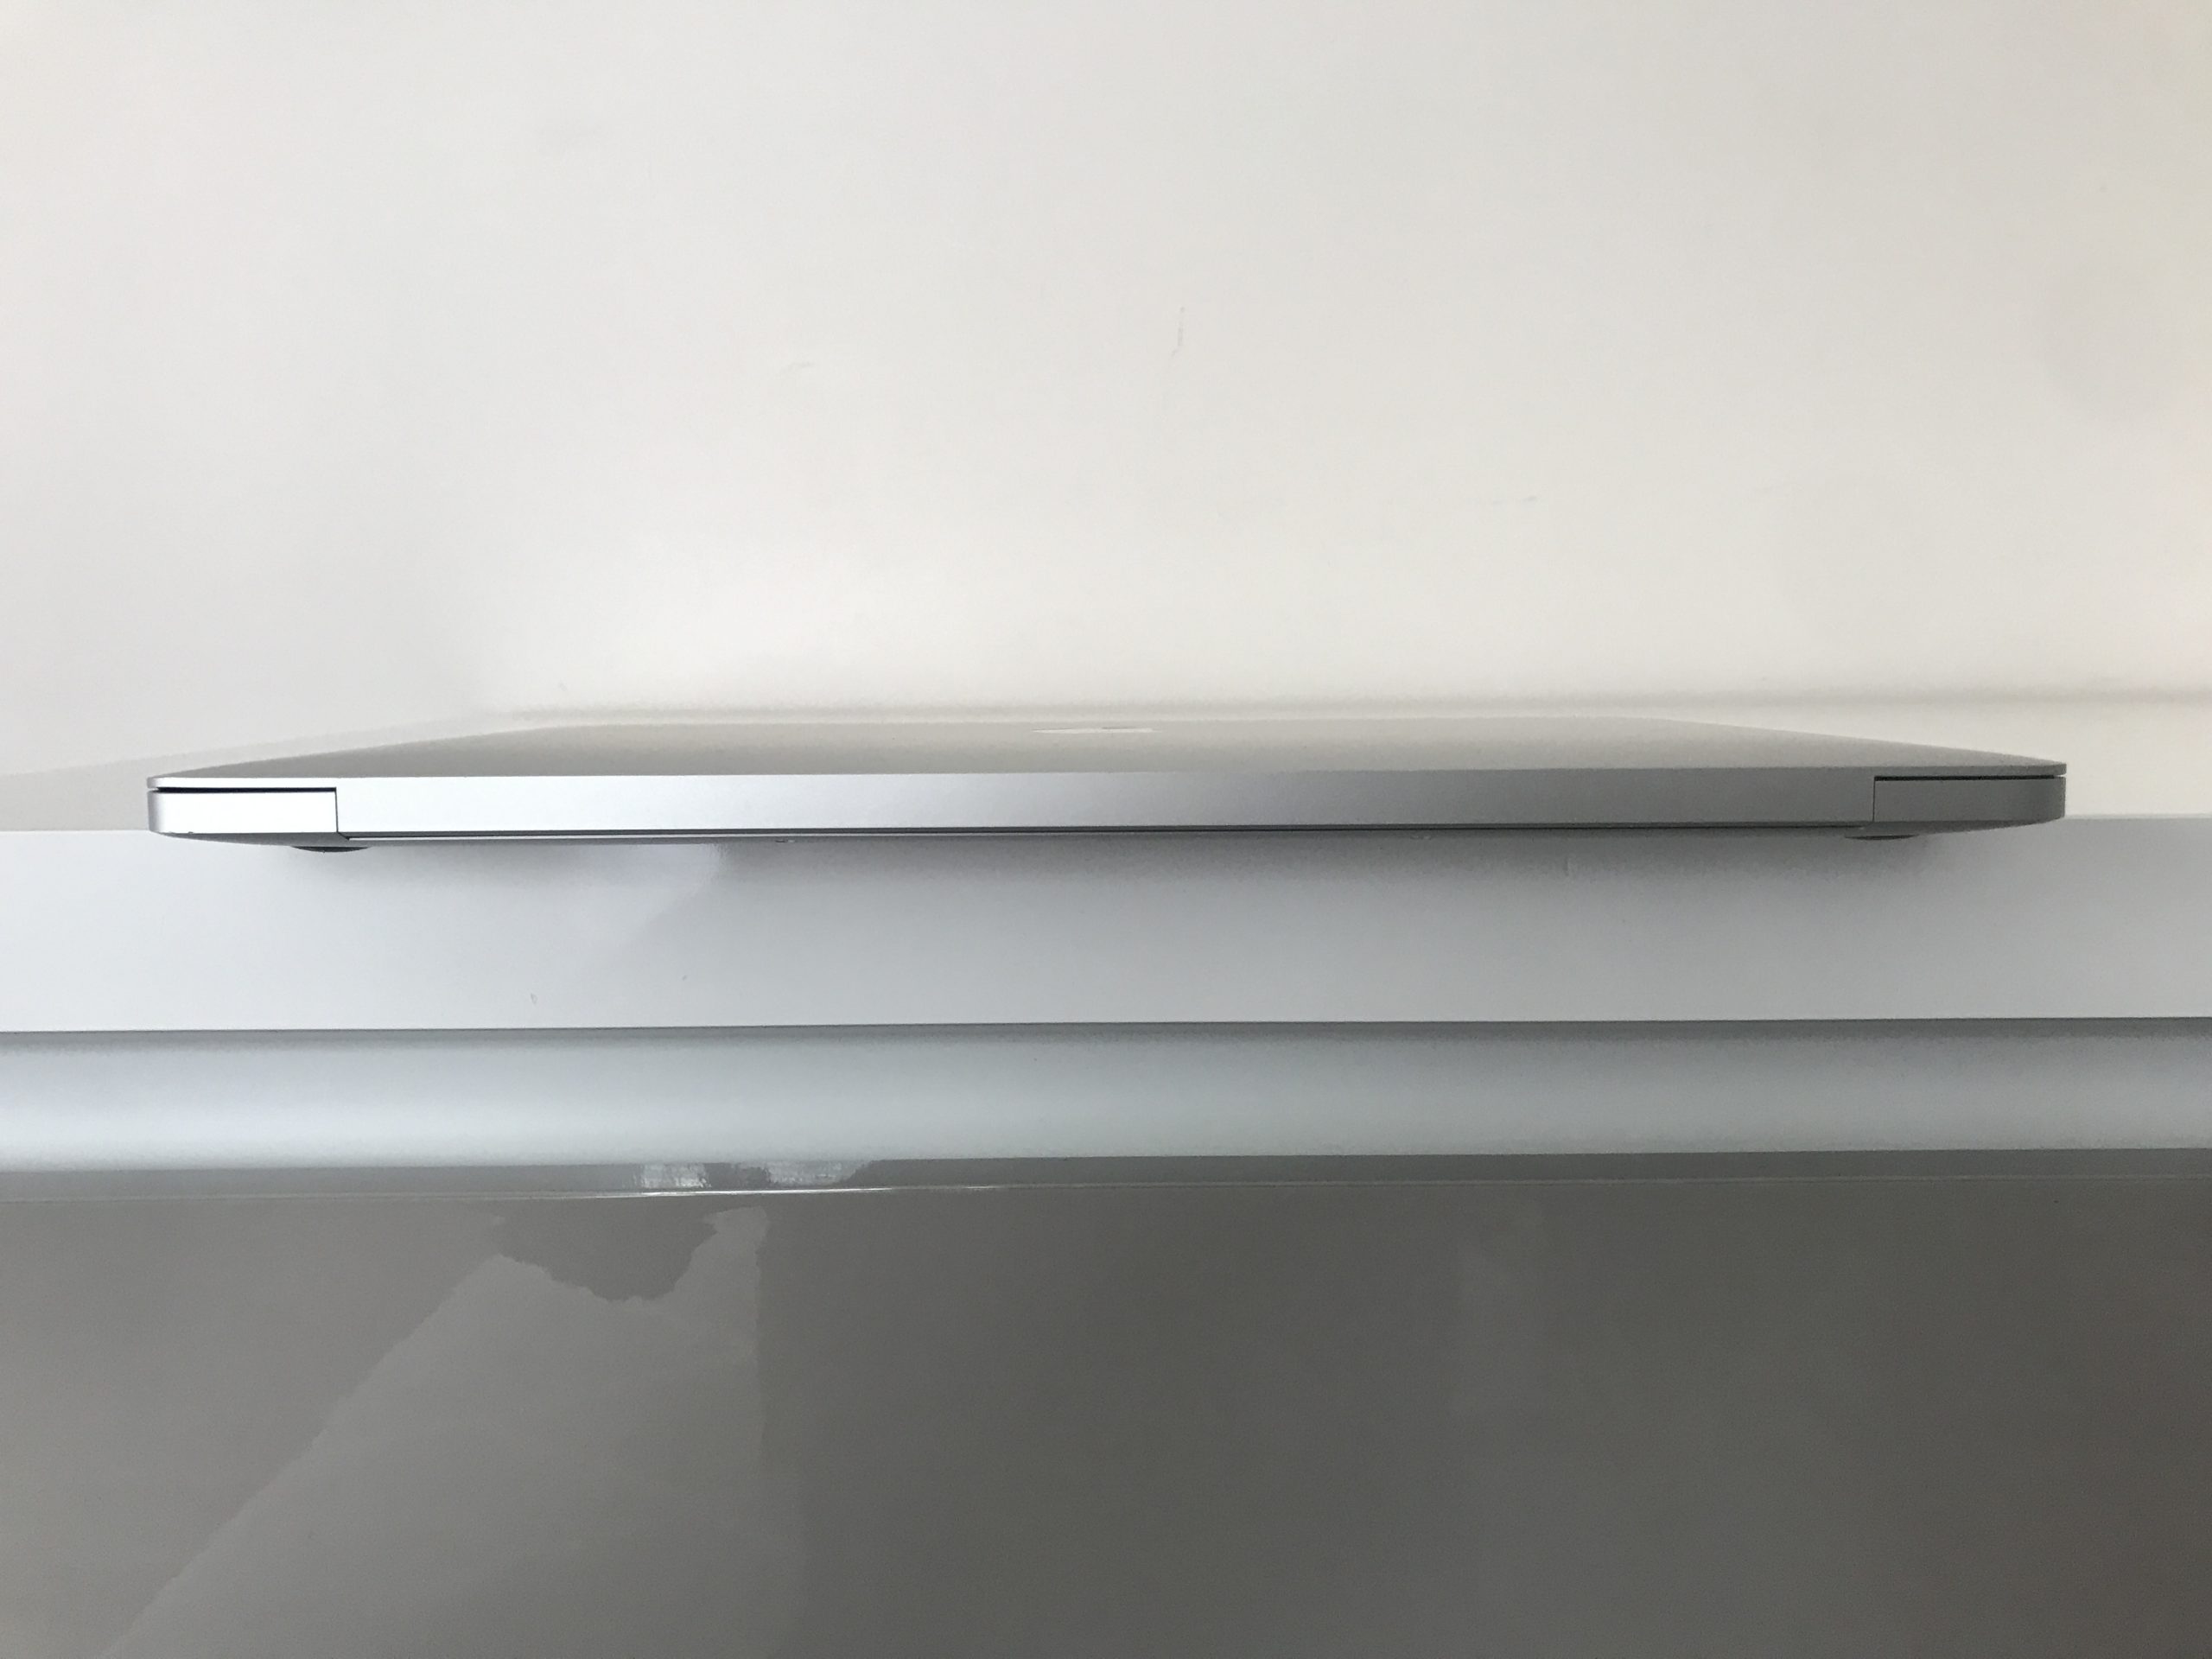 MacBook Air Retina – Core i5 – SSD 256Go – RAM 8Go